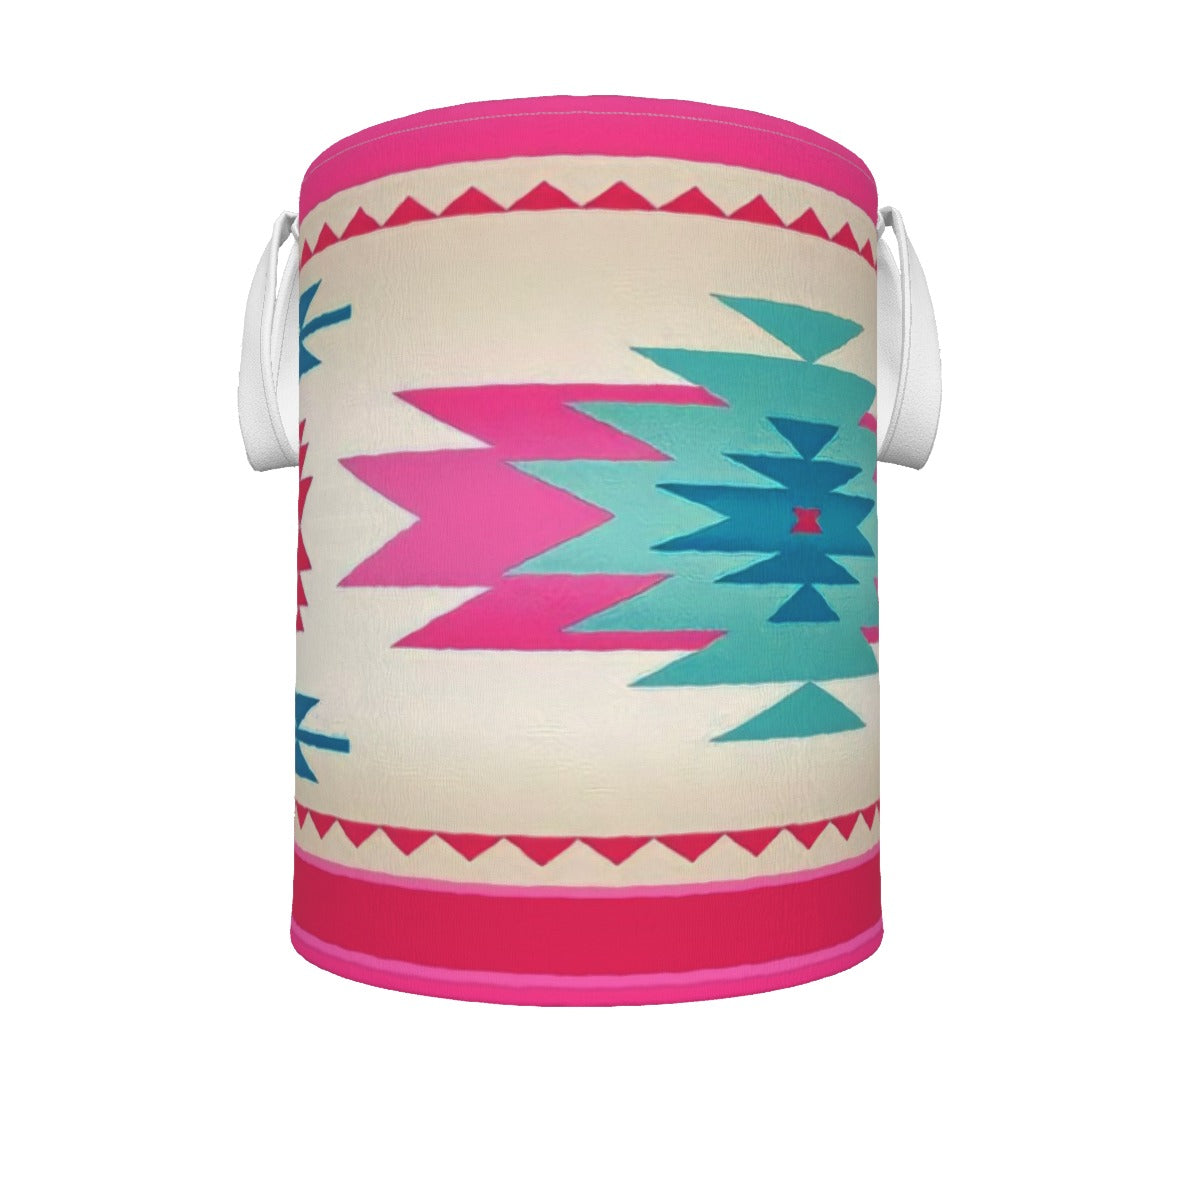 Pink Aztec Foldable Laundry Basket